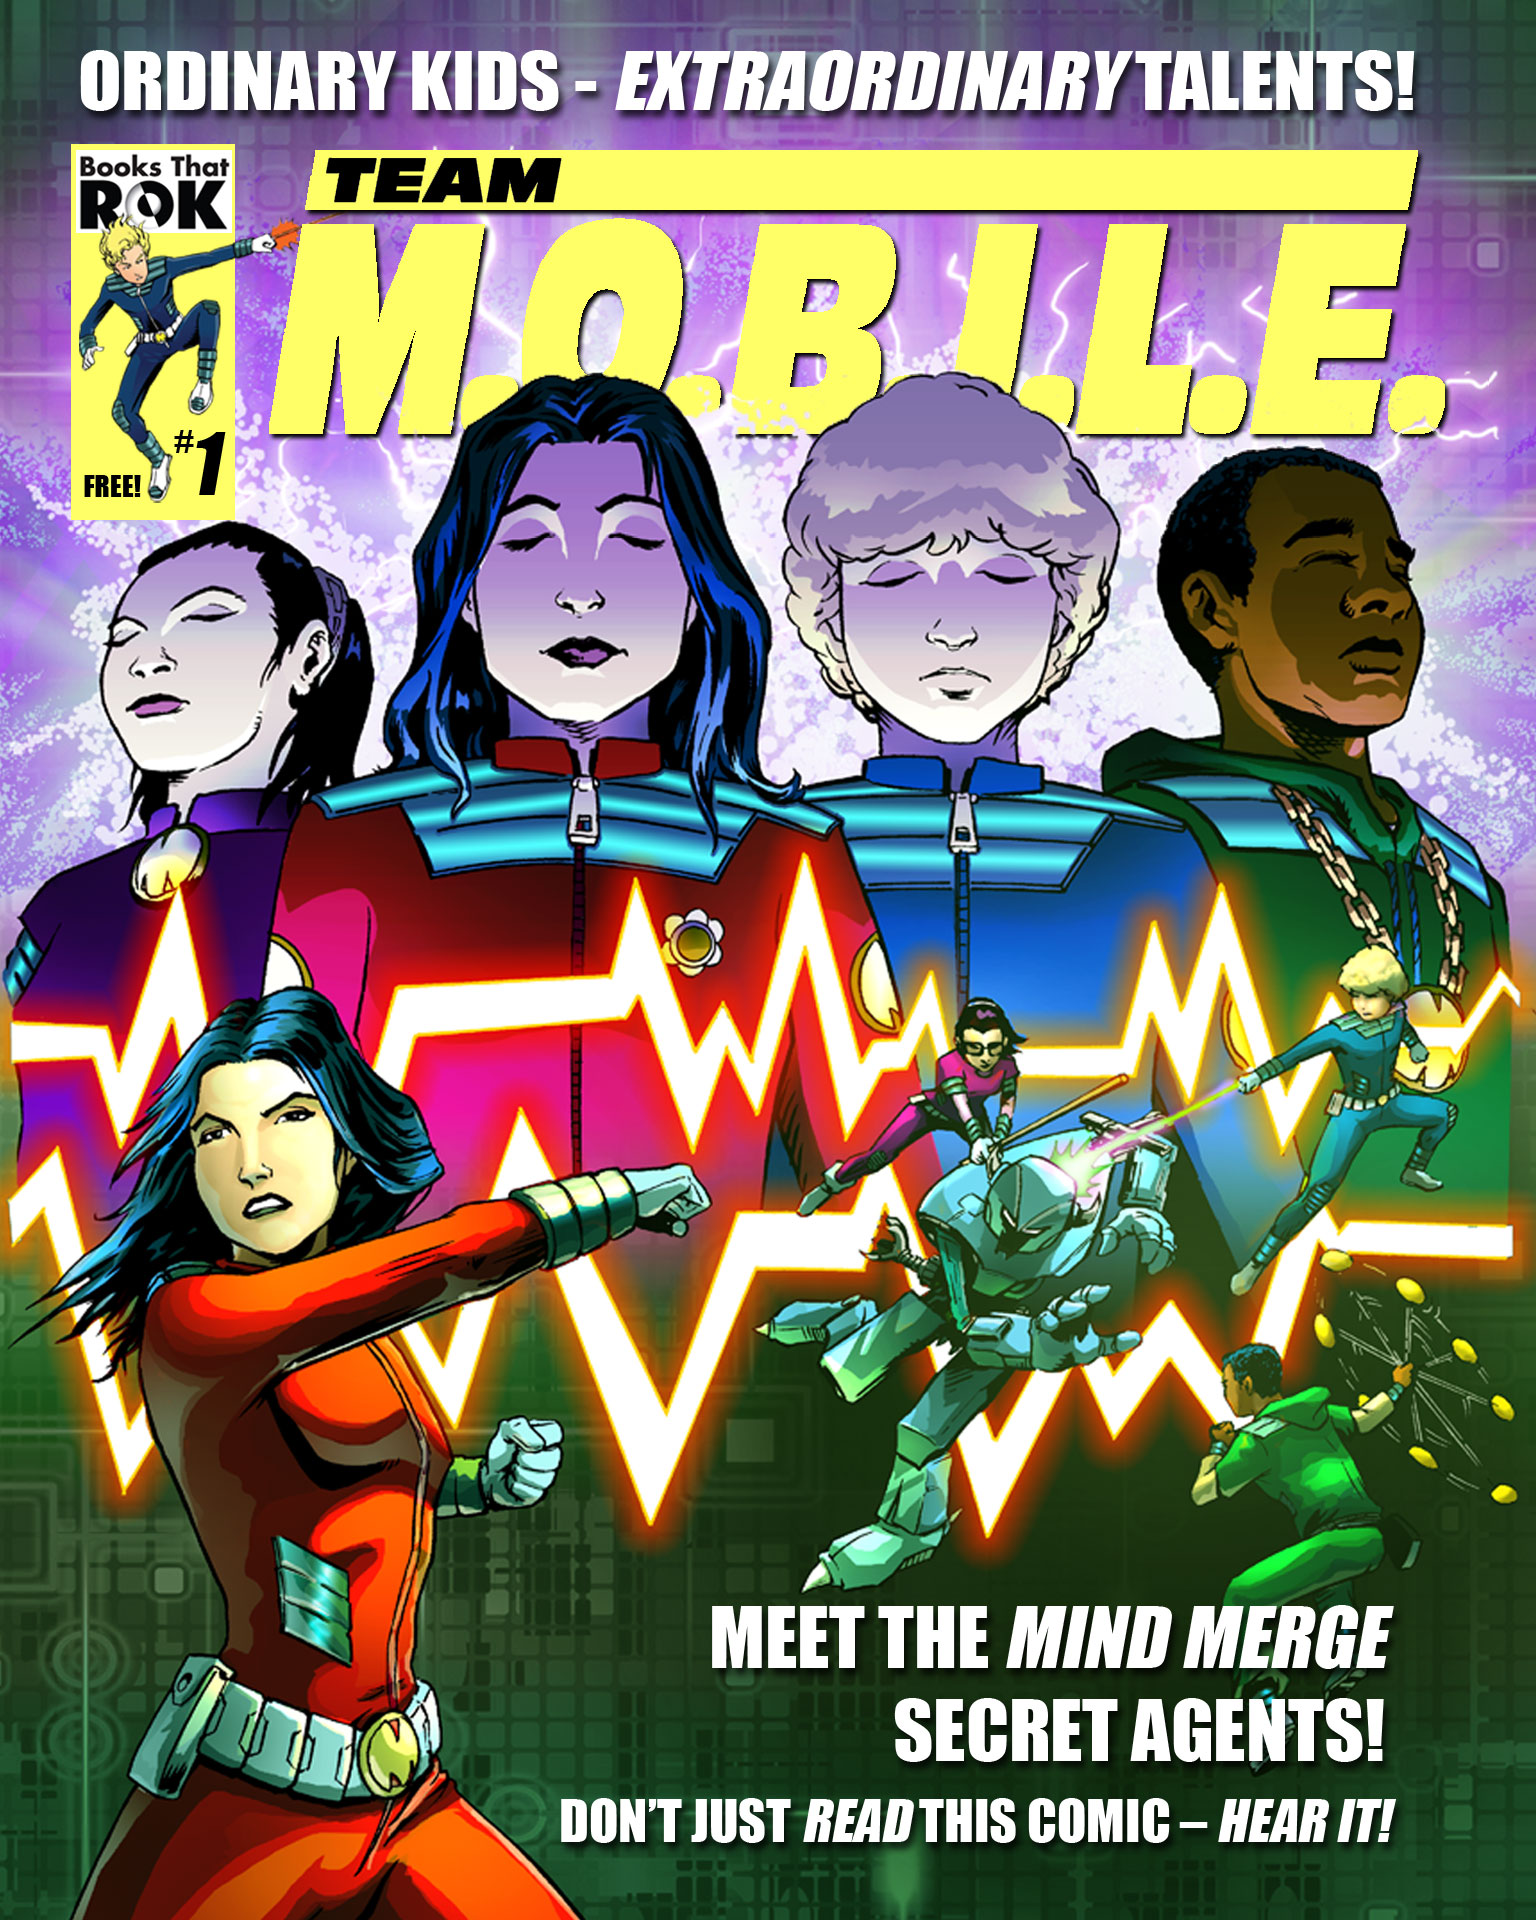 Team M.O.B.I.L.E. #1 audio comic